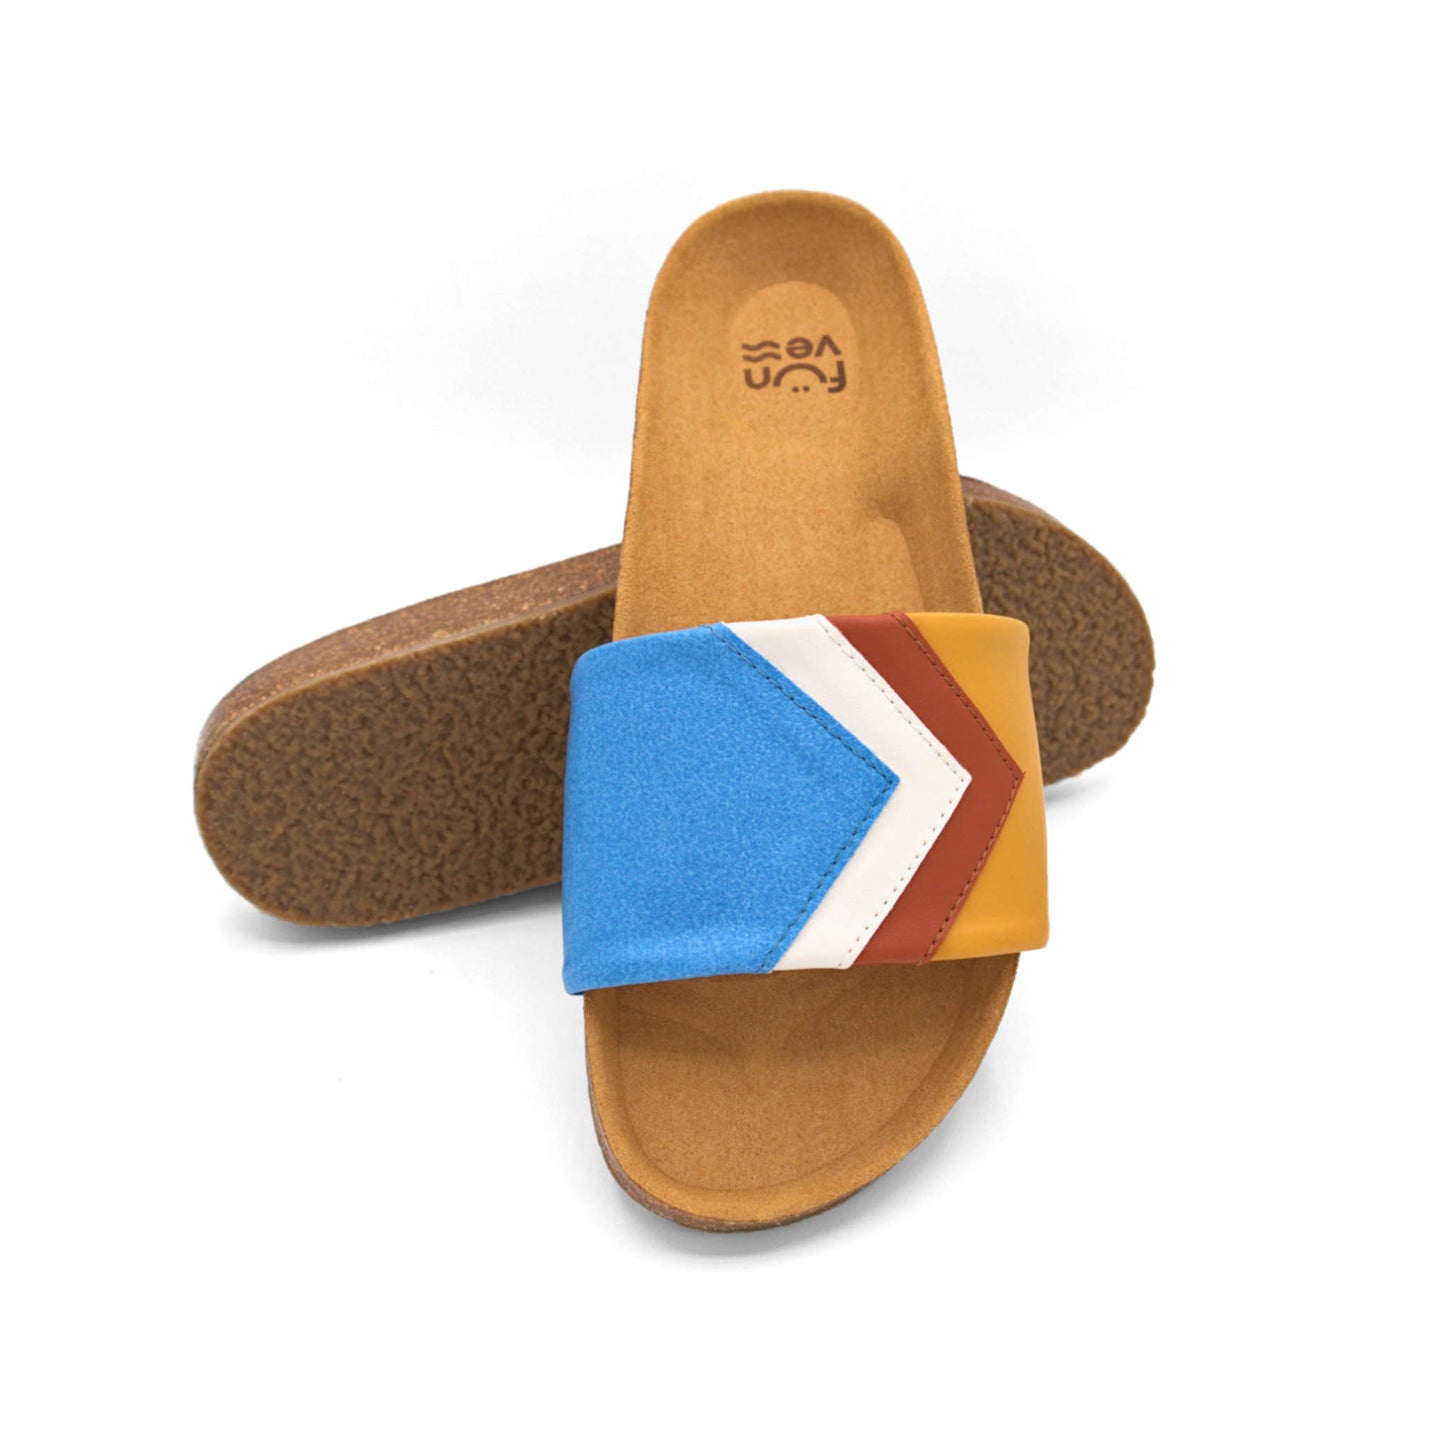 Blaue Sandalen, vegan mit Fußbett, Farben Azur, Weiß, Rust, Senf; Marke Fünve, Modell Sky, gestapelt